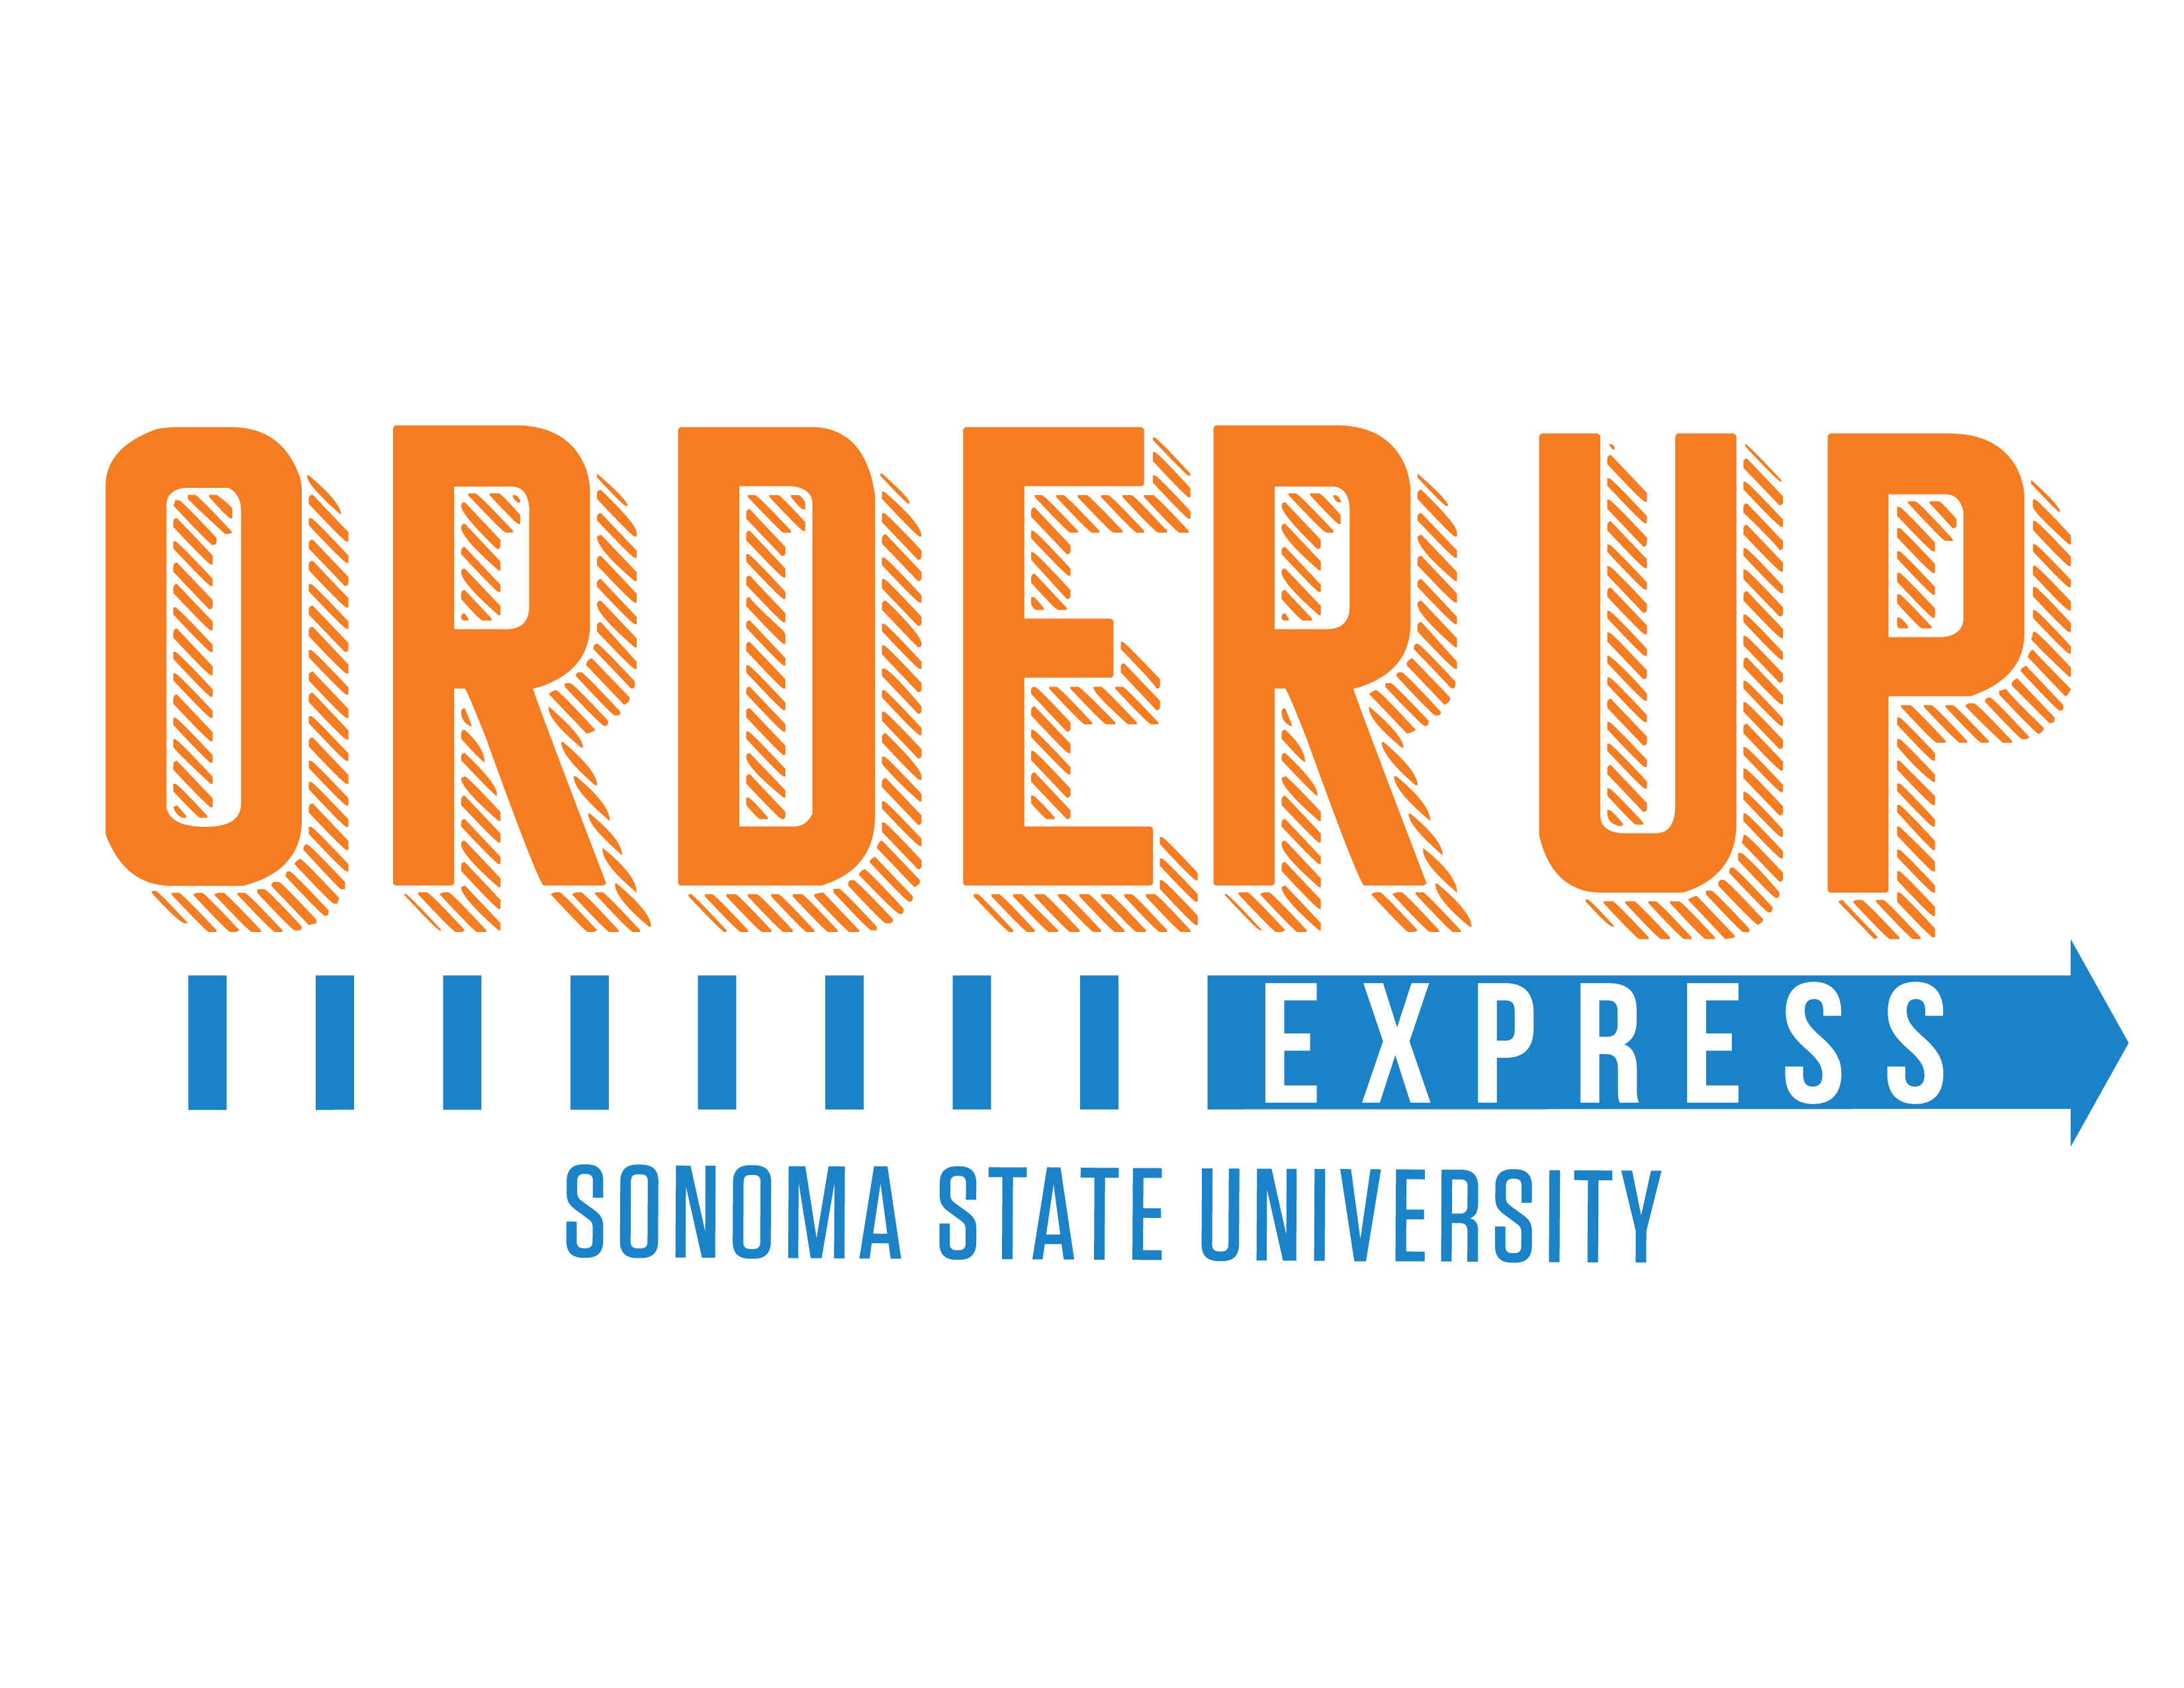 Order up Express Sonoma State University.